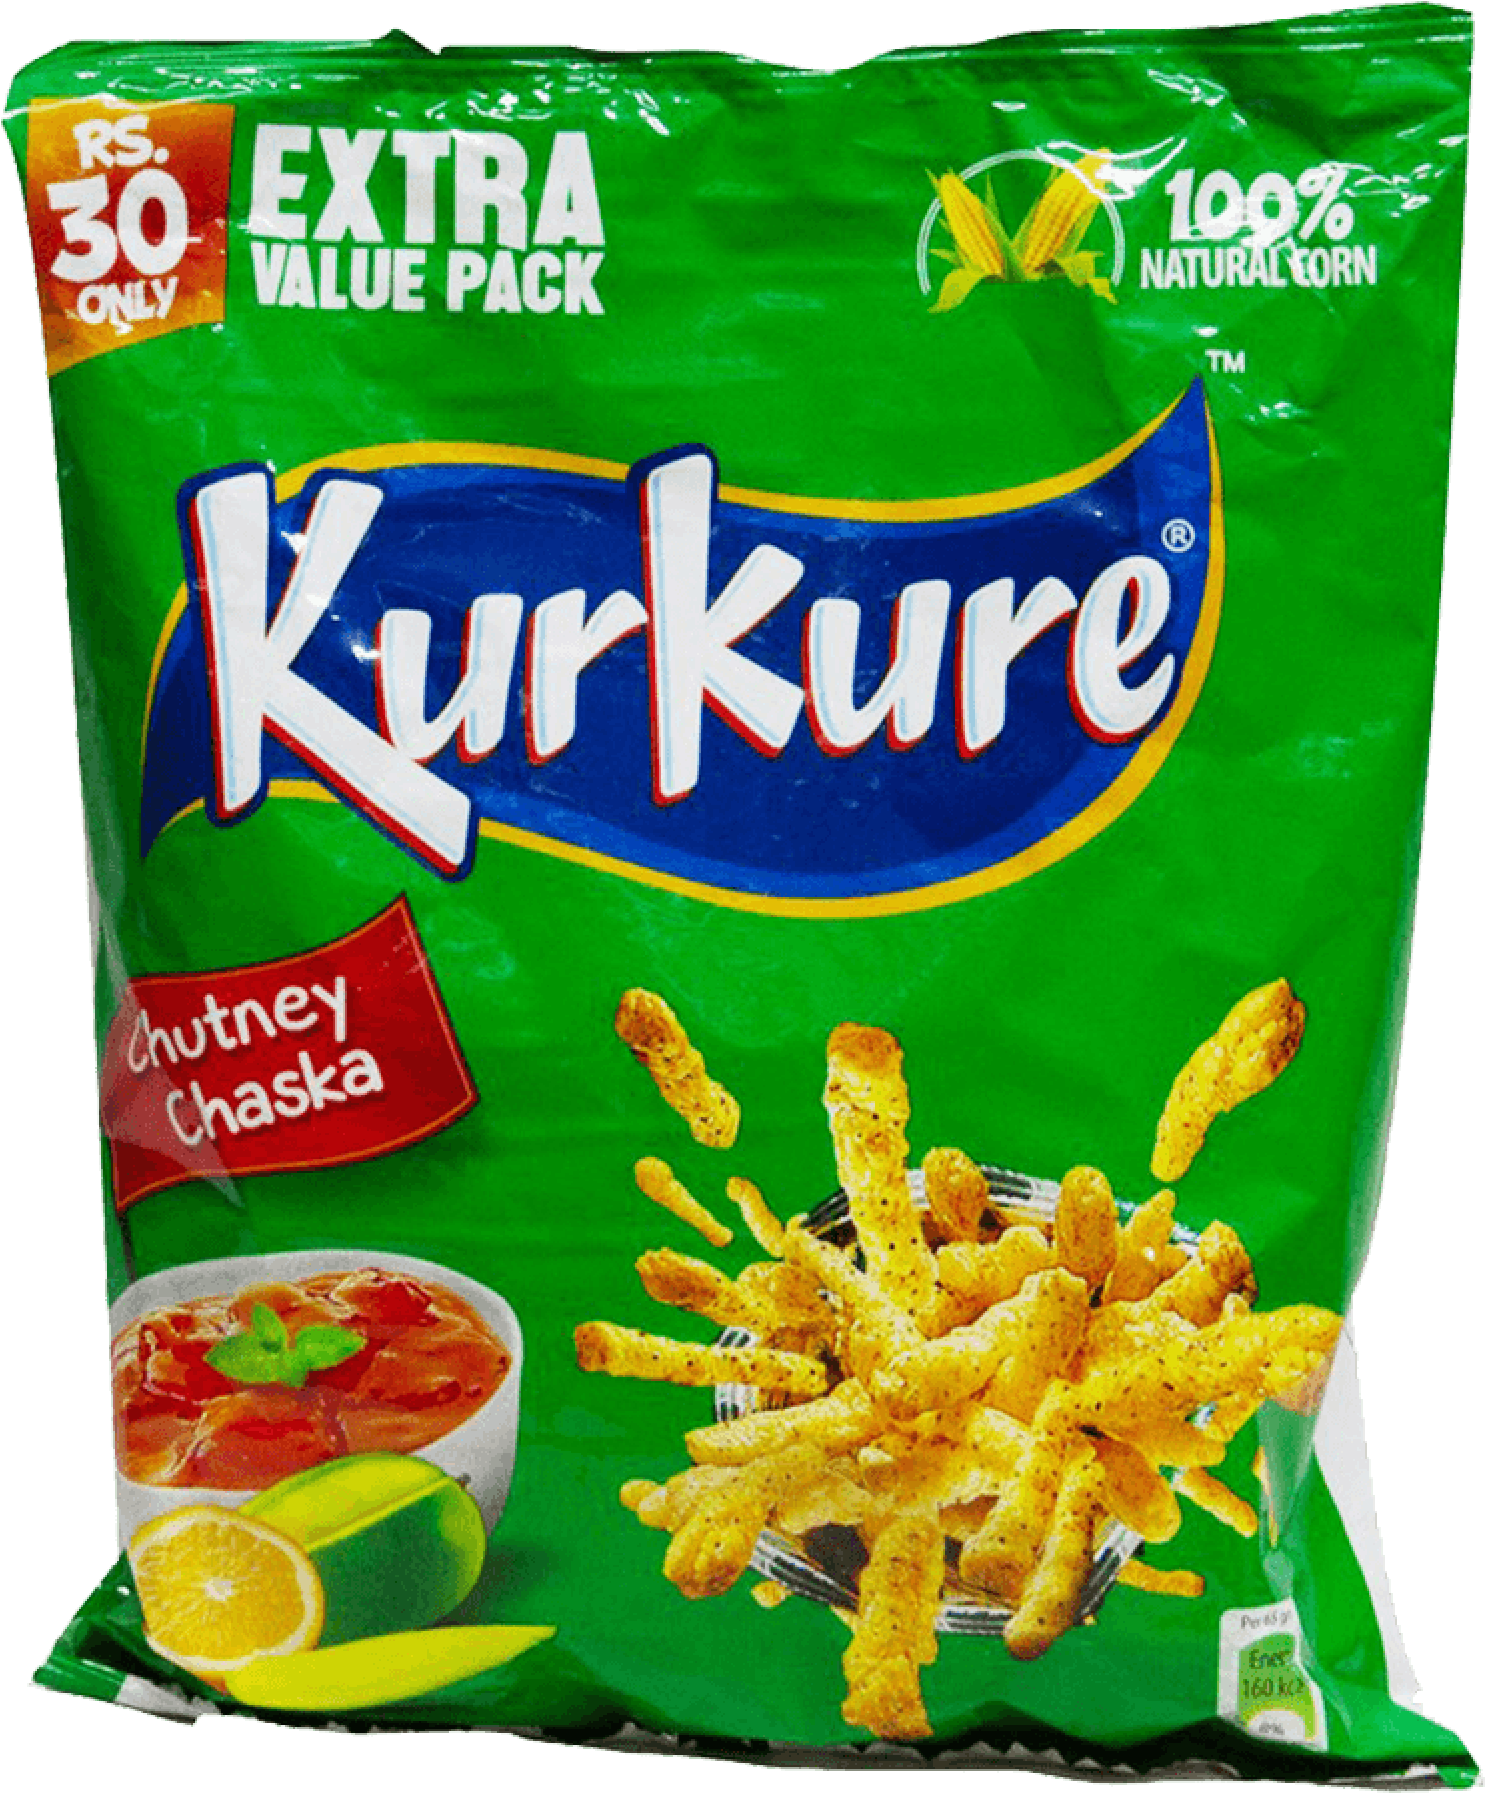 Kurkure Chutney Chaska Extra Value Pack